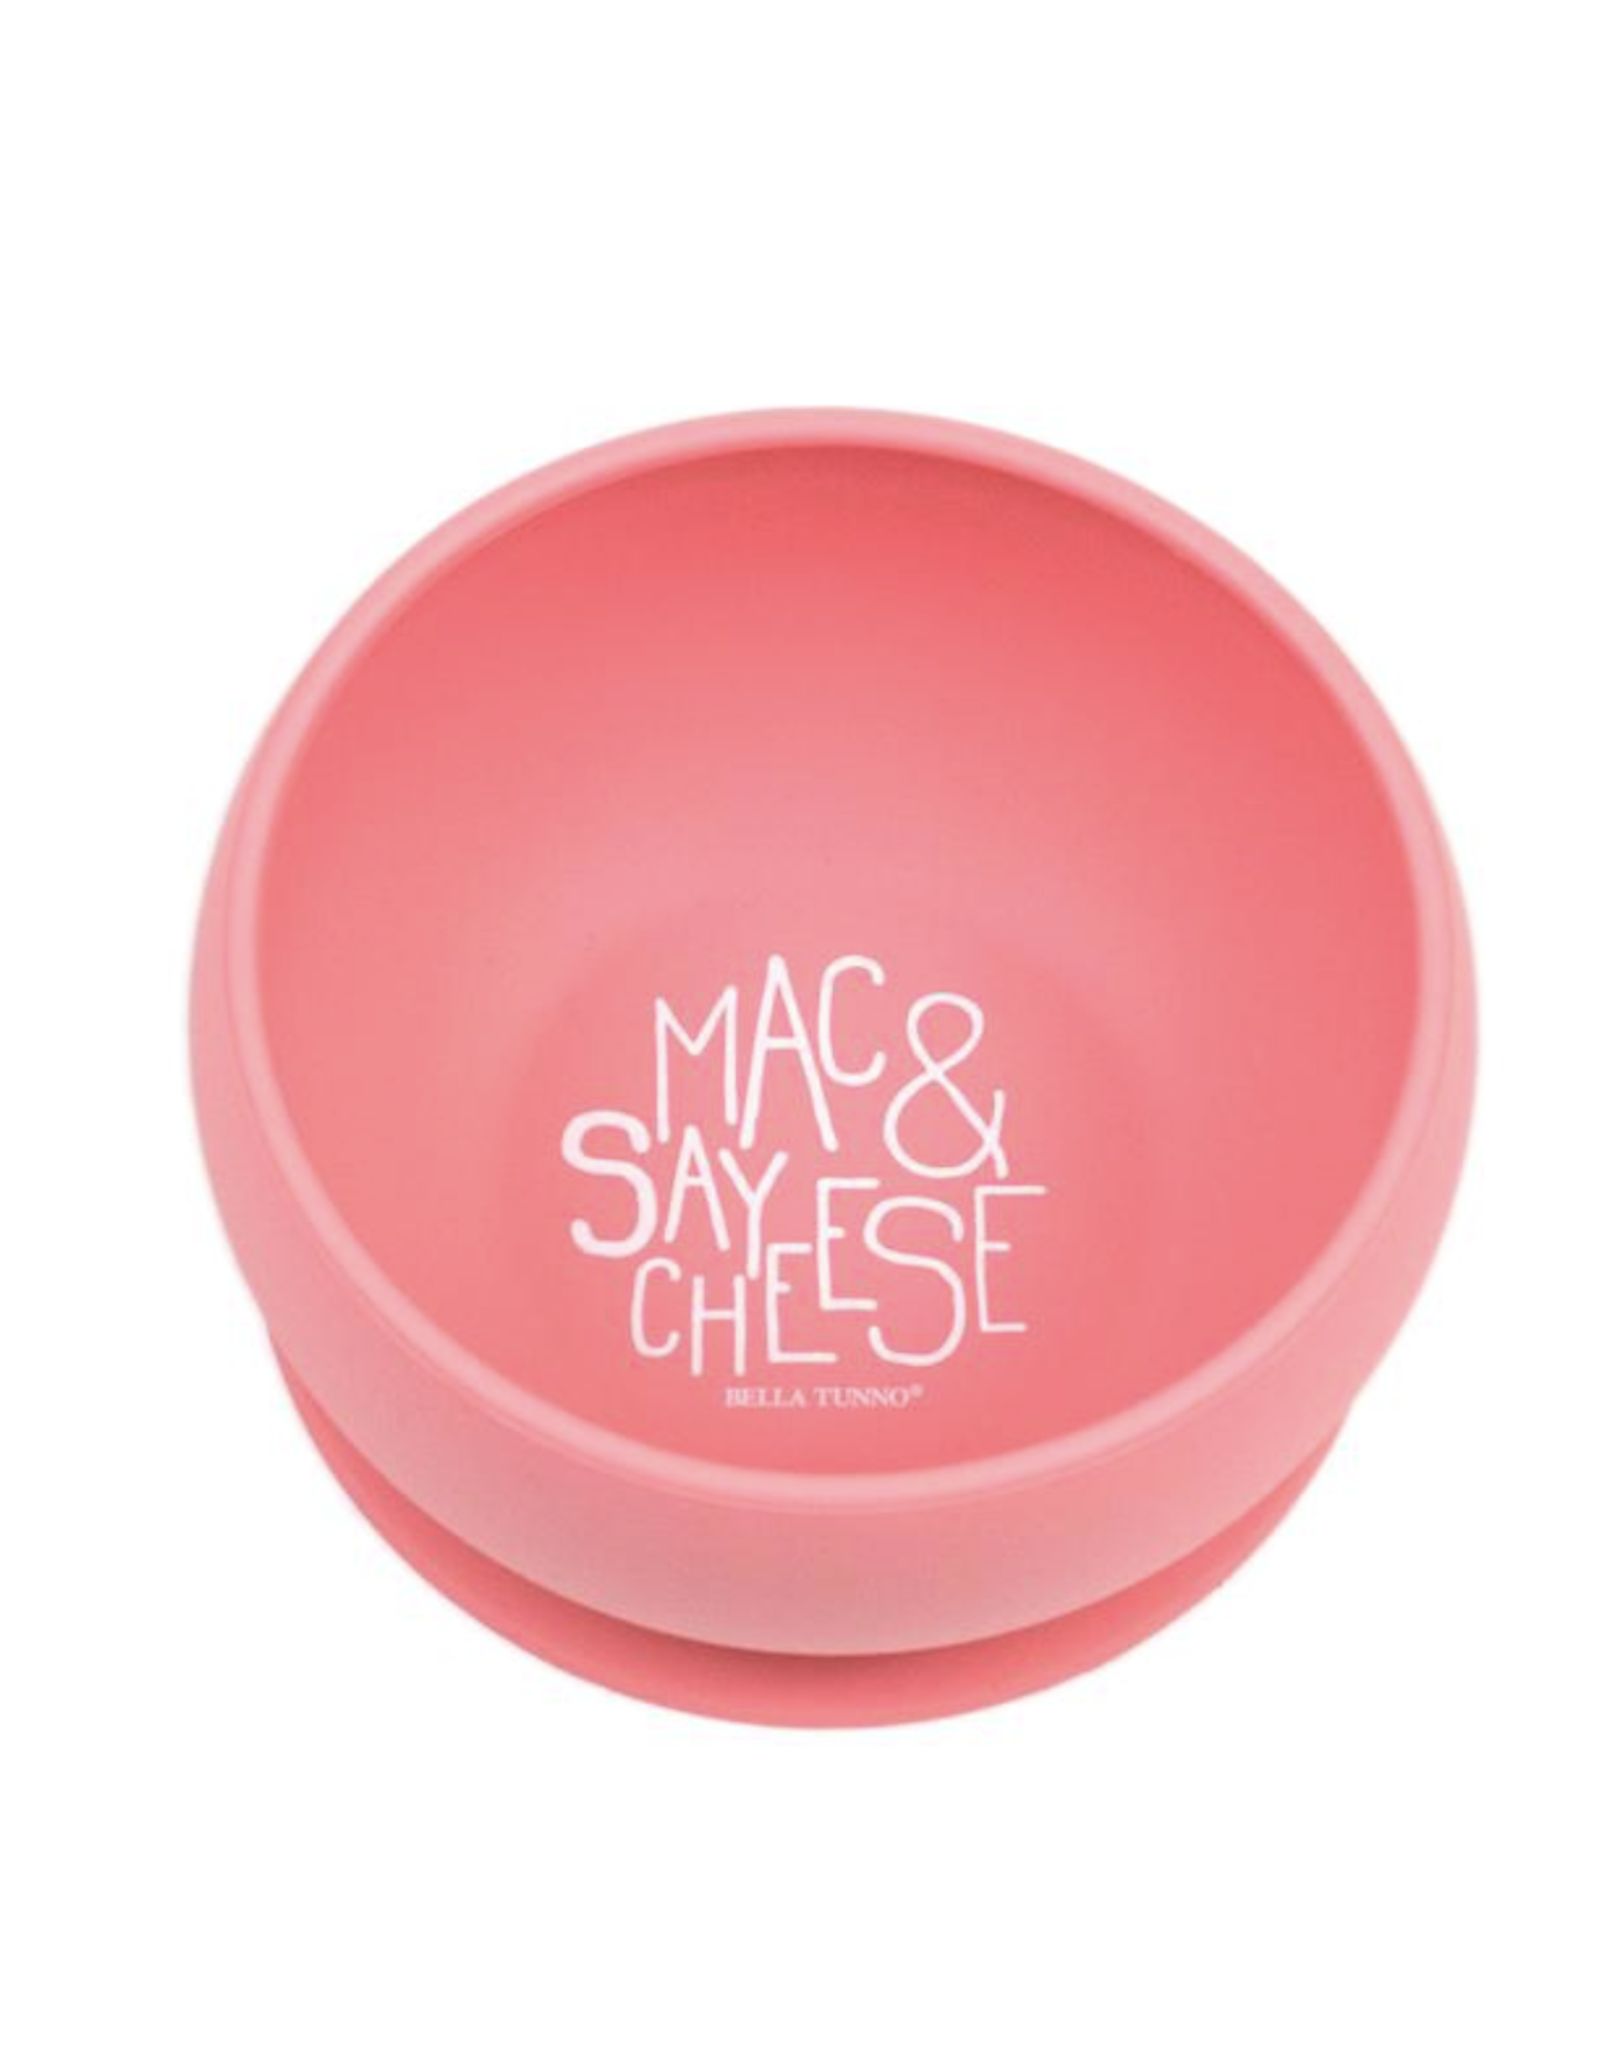 Say Mac and Cheese Suction Bowl